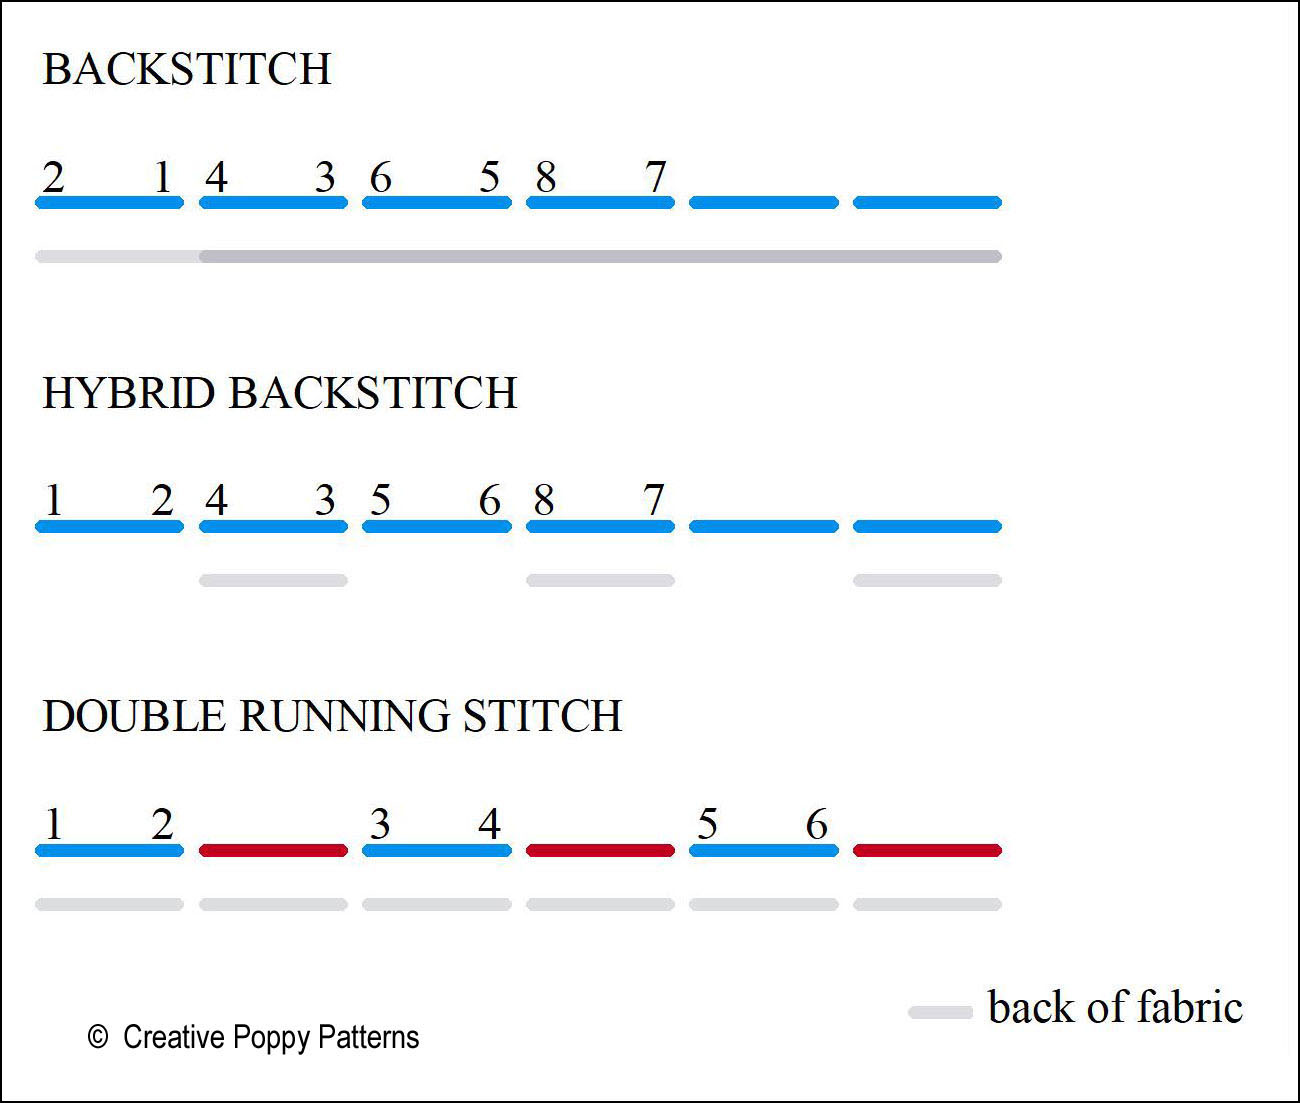 hybrid backstitch: work a running stitch, returning backwards every second stitch to fill the blank